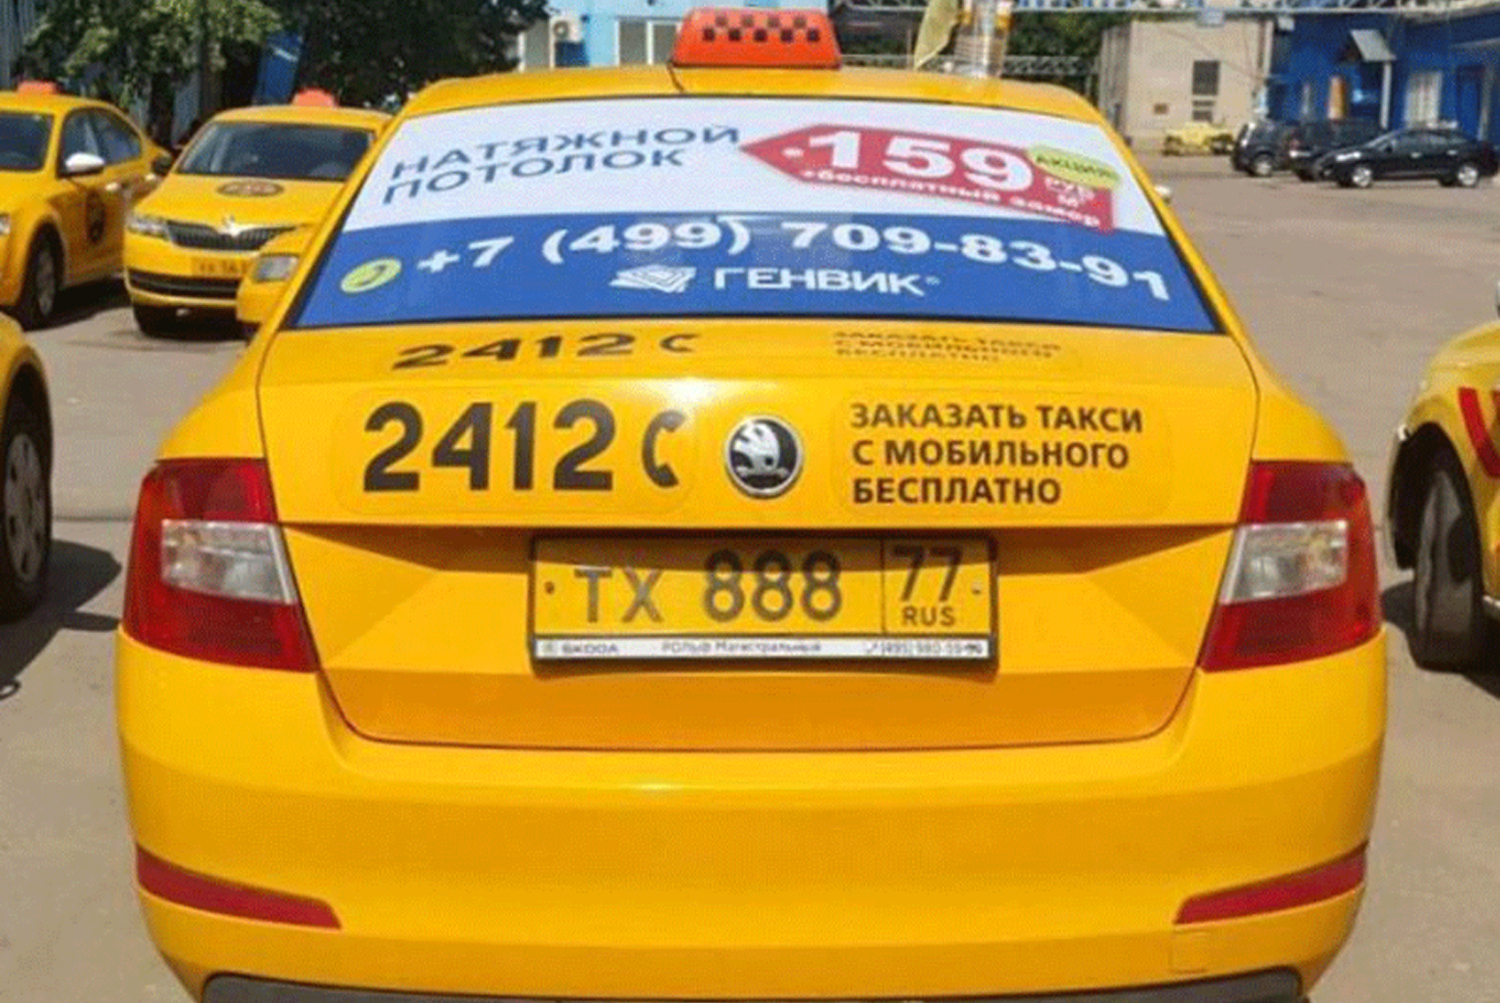 Такси онега. Реклама такси. Реклама такси на авто. Наклейки такси. Номер такси.